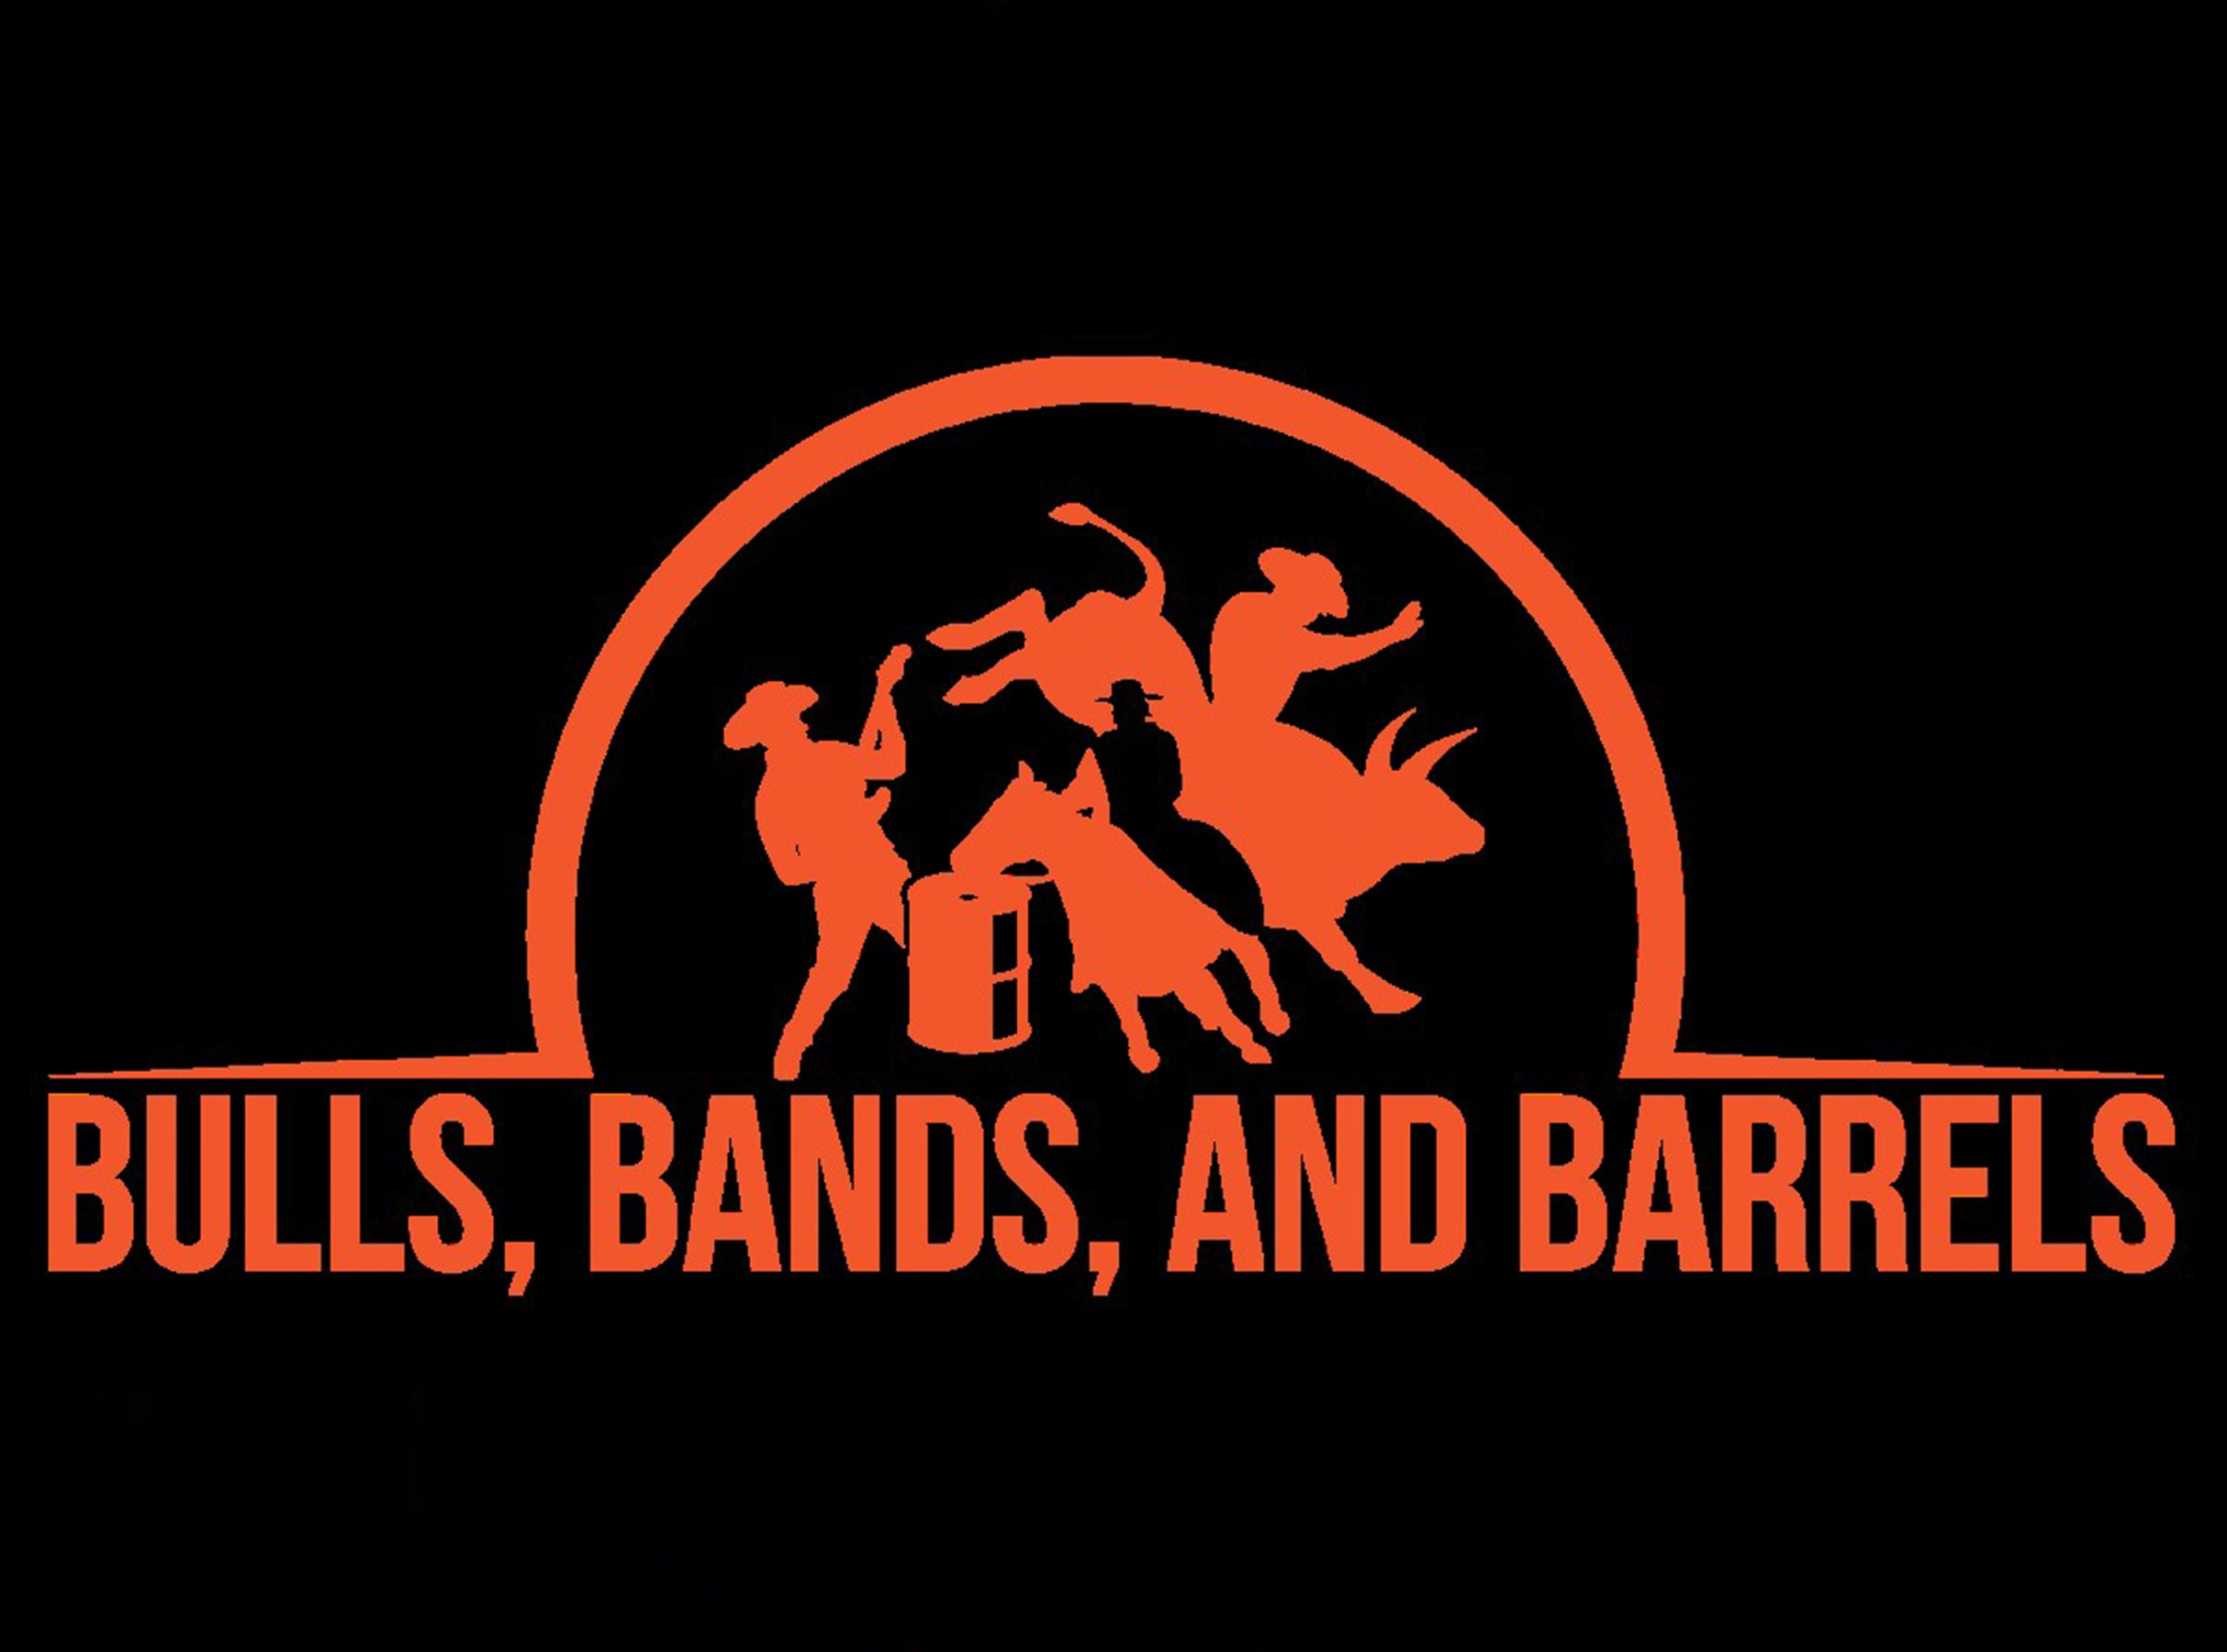 Bulls, Bands, and Barrels featuring Dylan Gossett